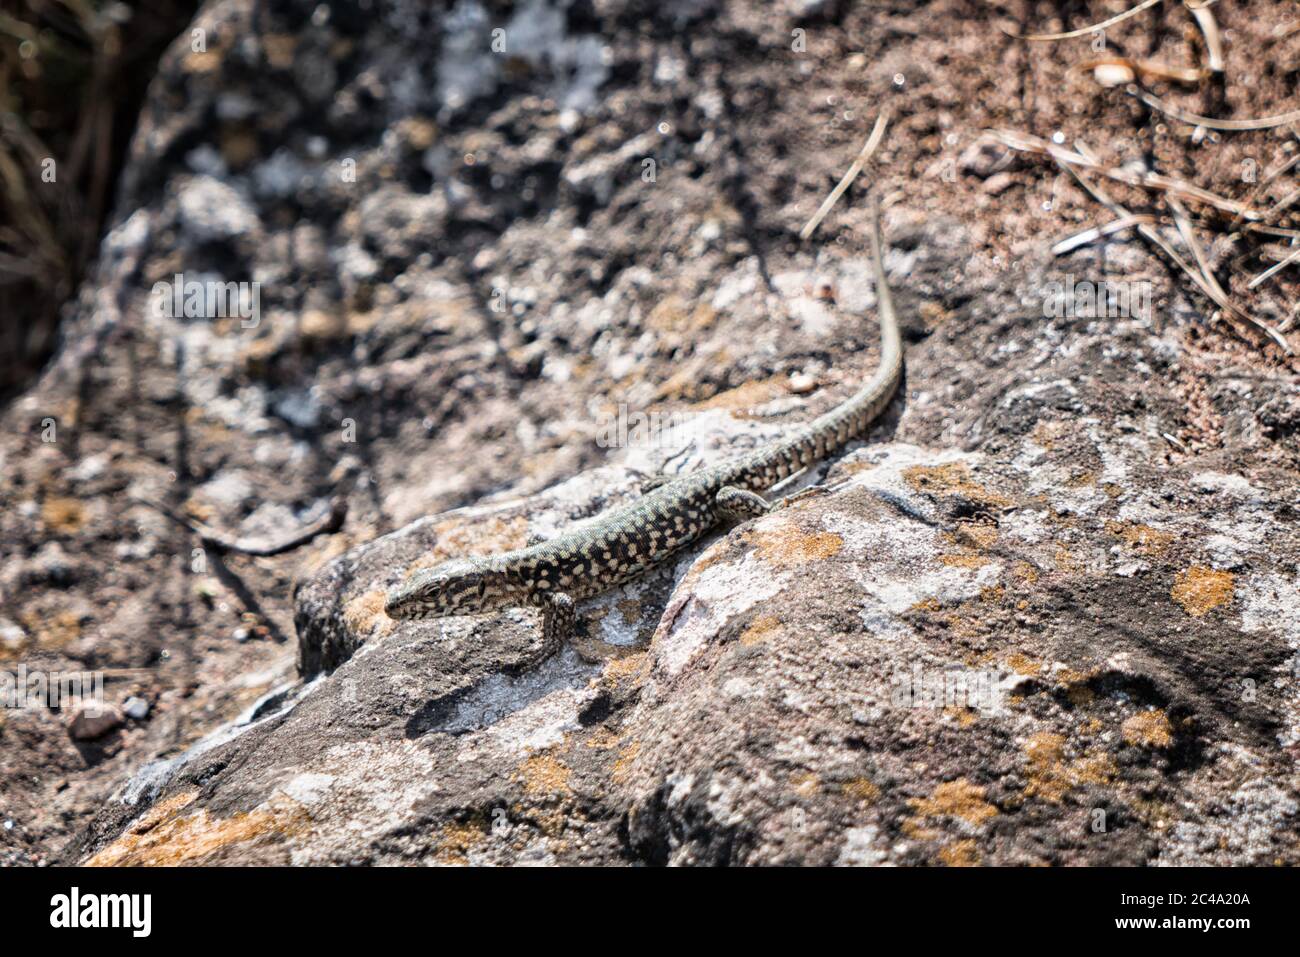 Un lagarto común de pared (Posarcis muralis) disfruta del sol. Foto de stock